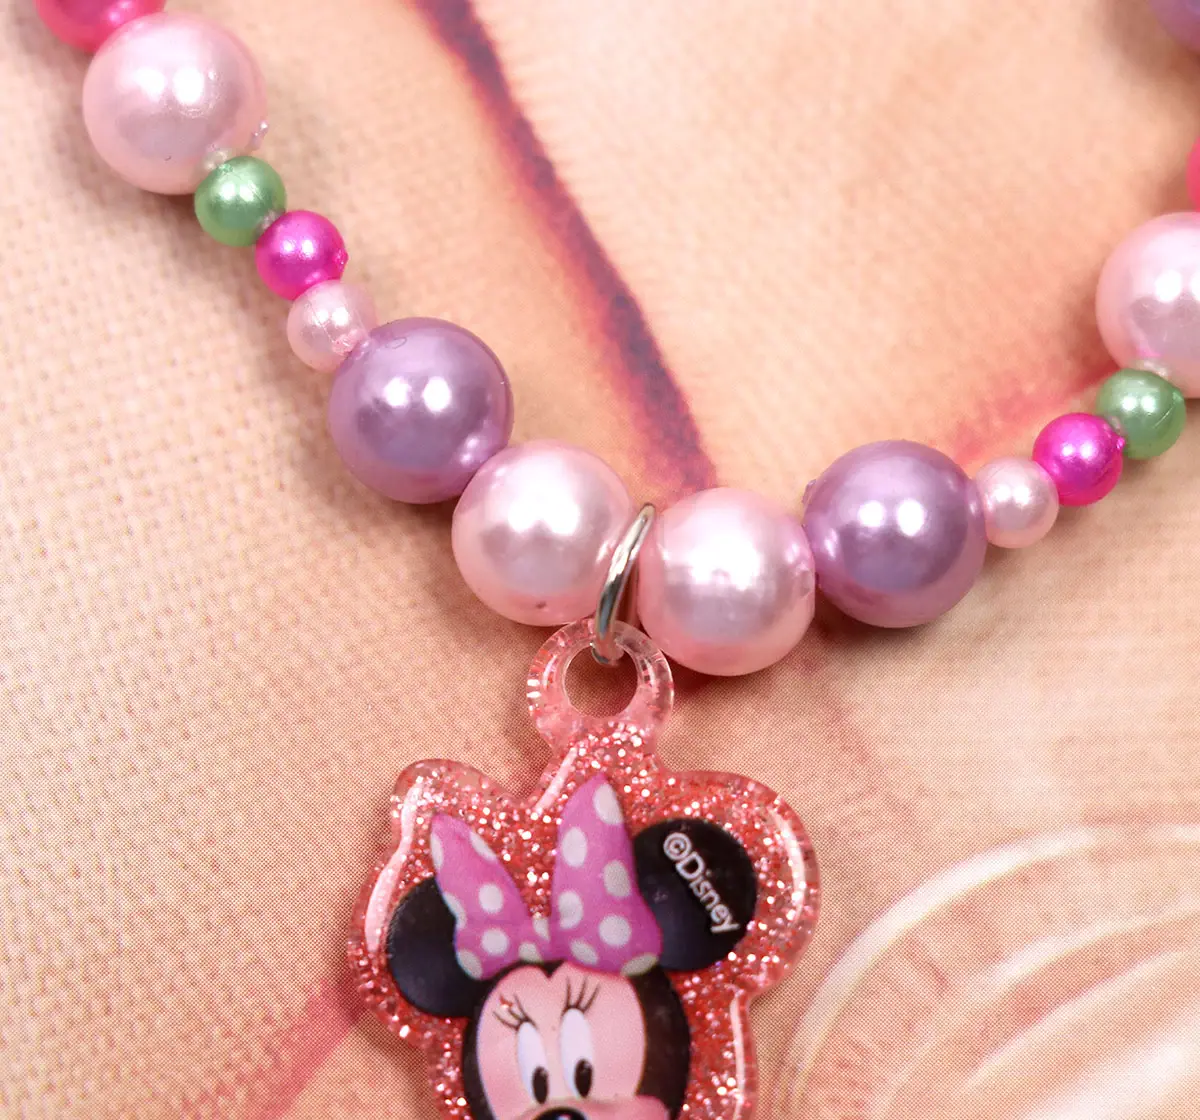 Li'l Diva Disney Minnie Mouse Fashion Accessories Set For Girls Ages 3Y+, Multicolour